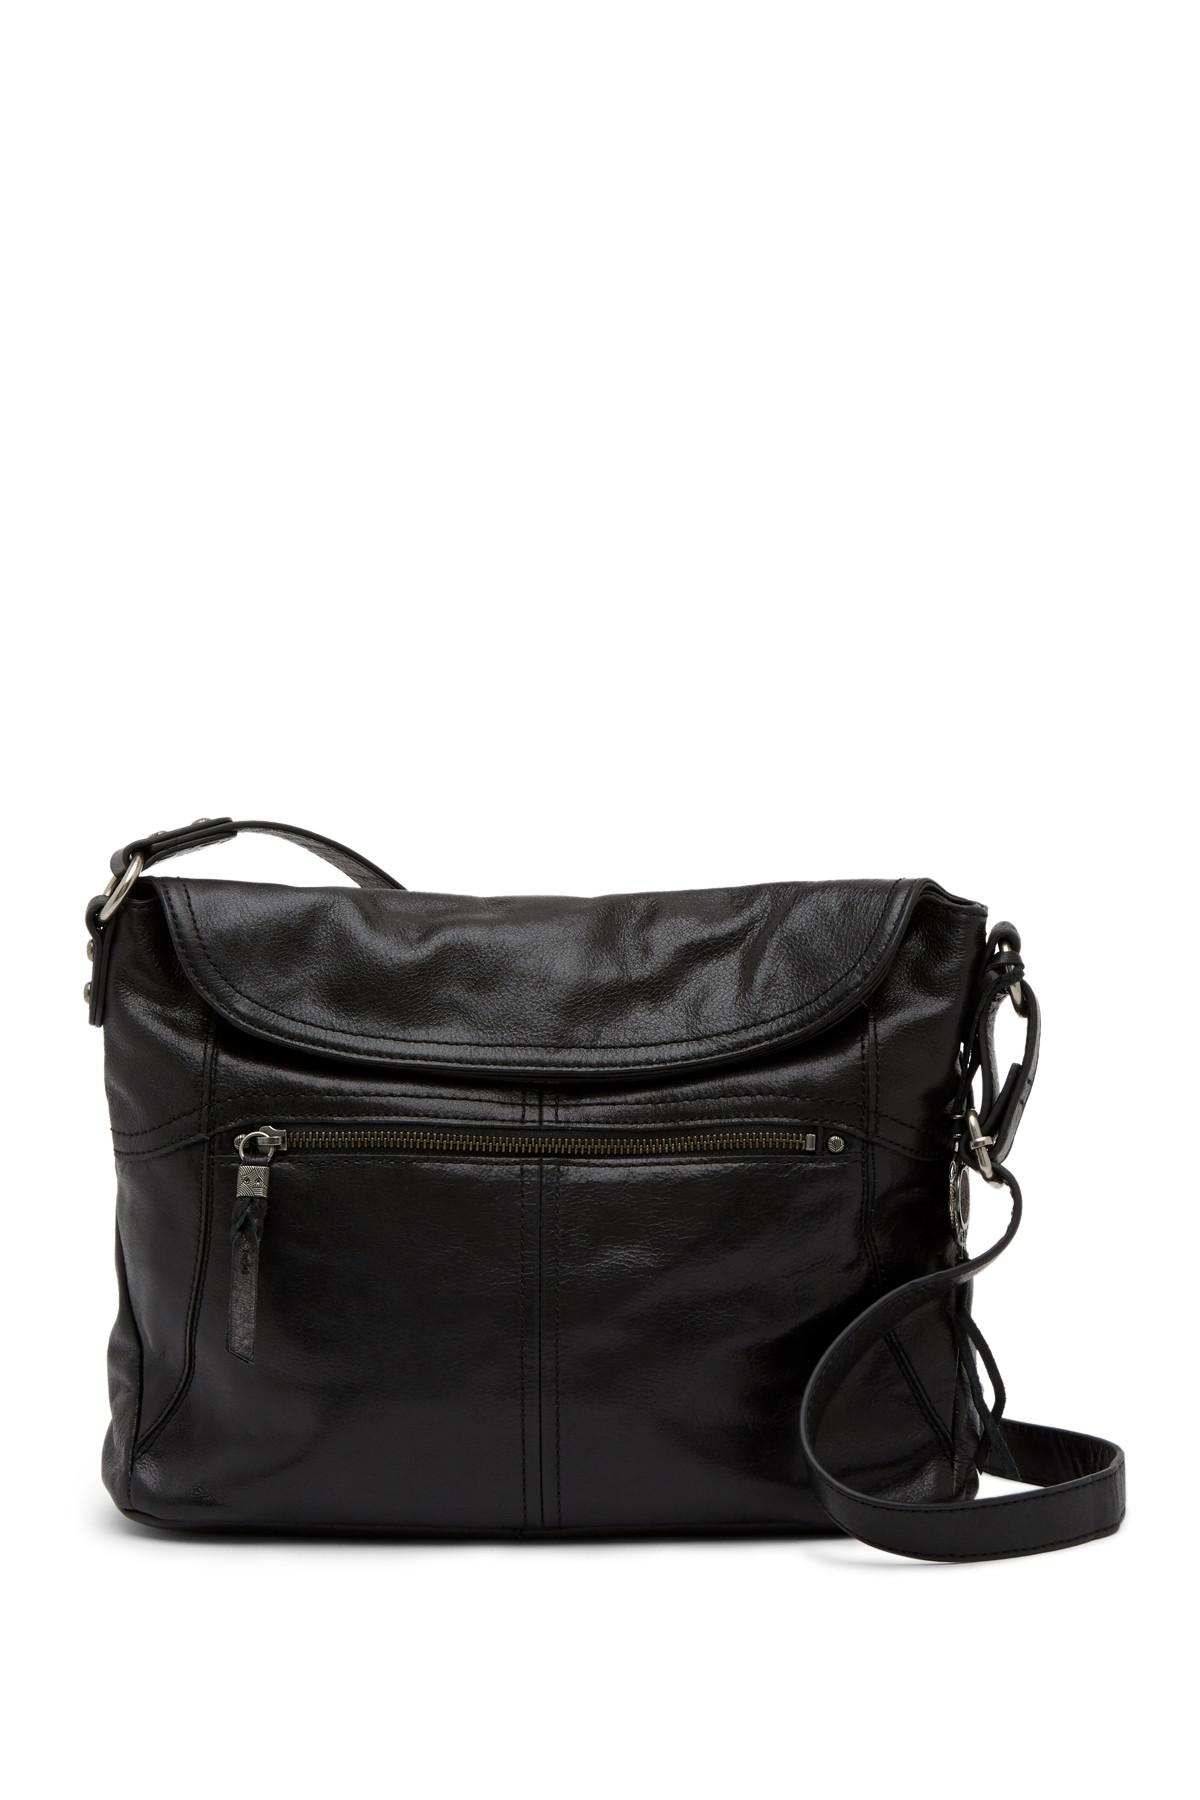 The Sak Esperato Flap Leather Hobo Bag in Black - Lyst